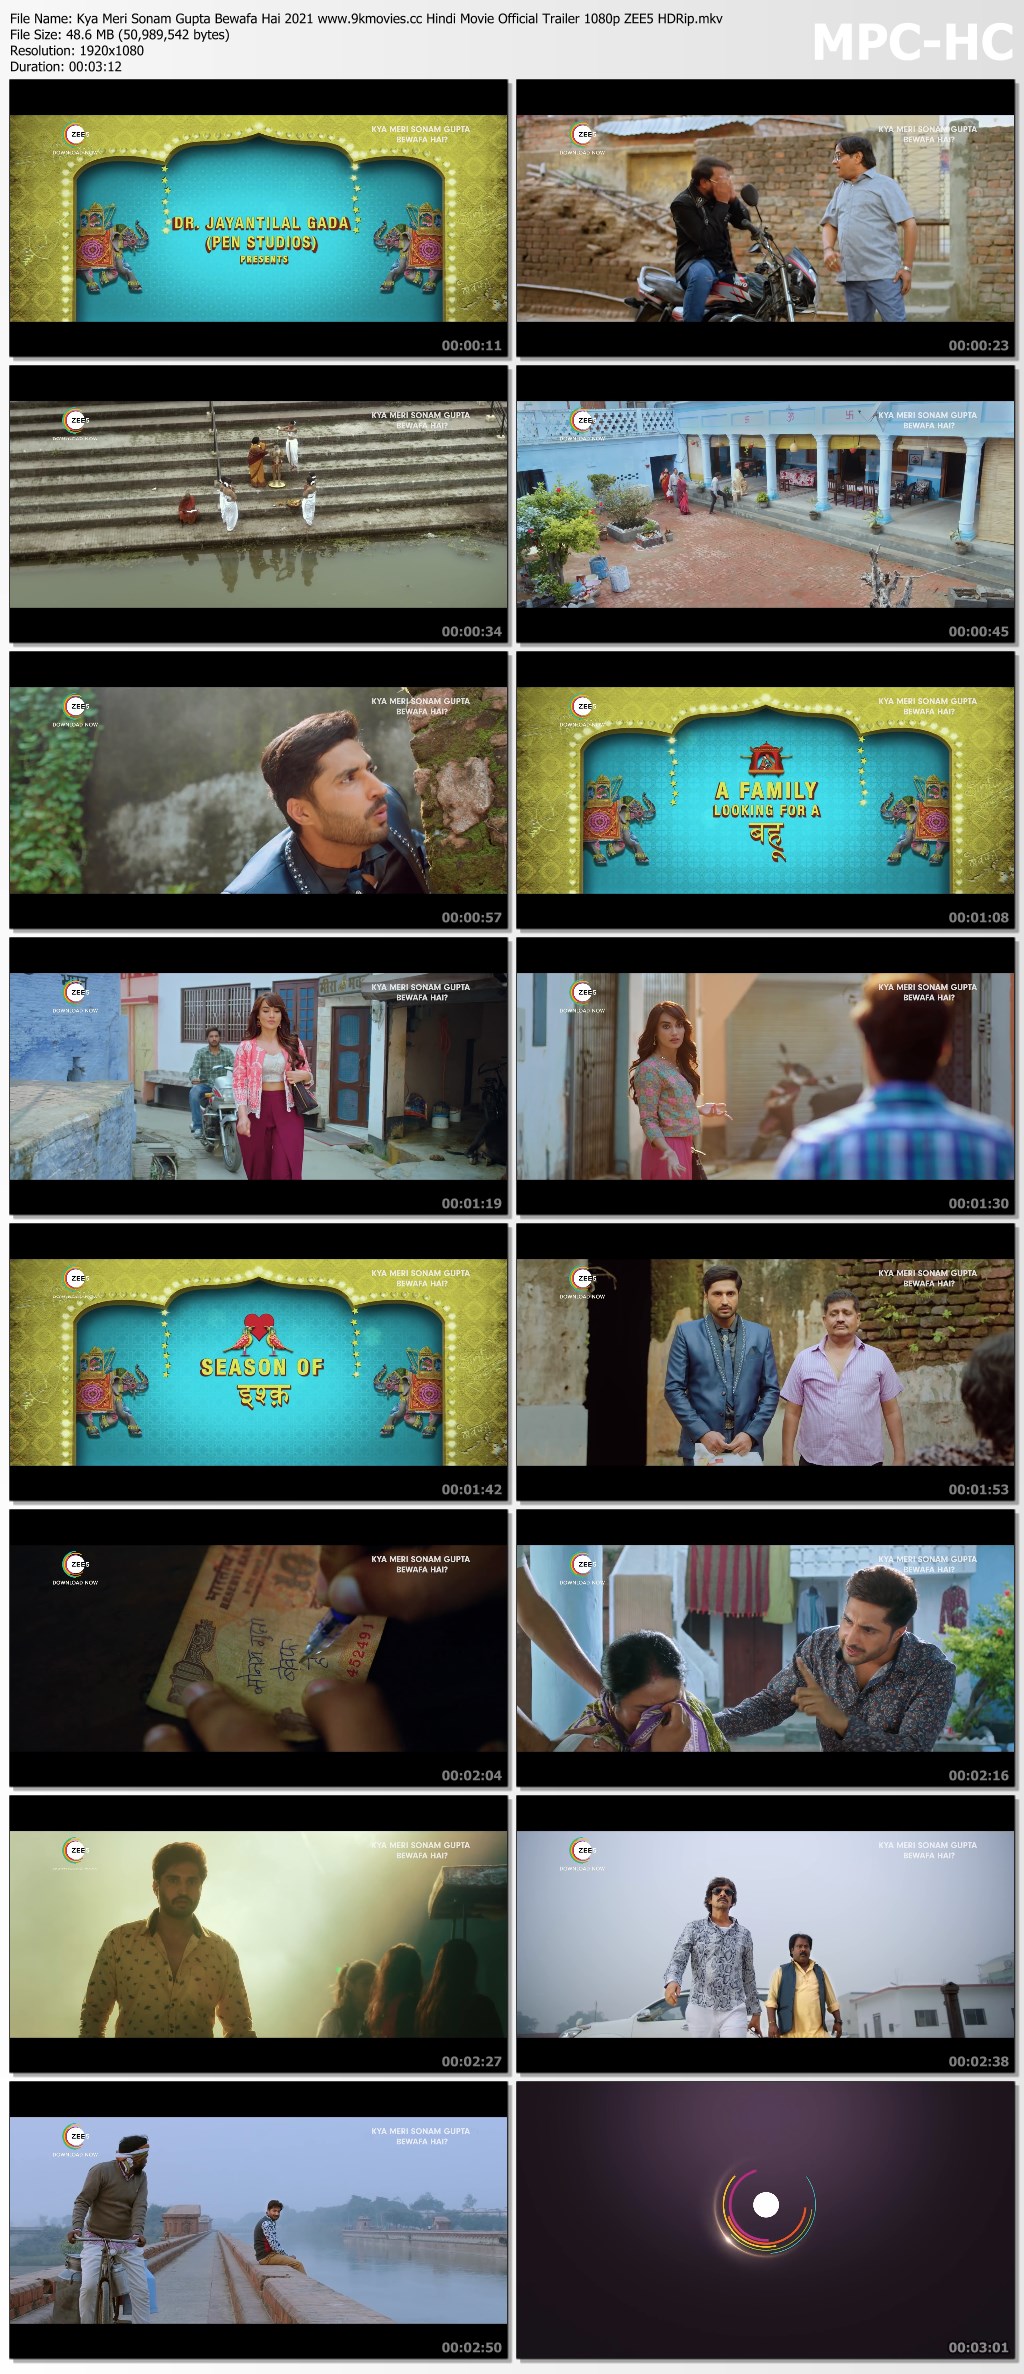 Kya Meri Sonam Gupta Bewafa Hai 2021 www.9kmovies.cc Hindi Movie Official Trailer 1080p ZEE5 HDRip.mkv thumbsf263343493cd4d37